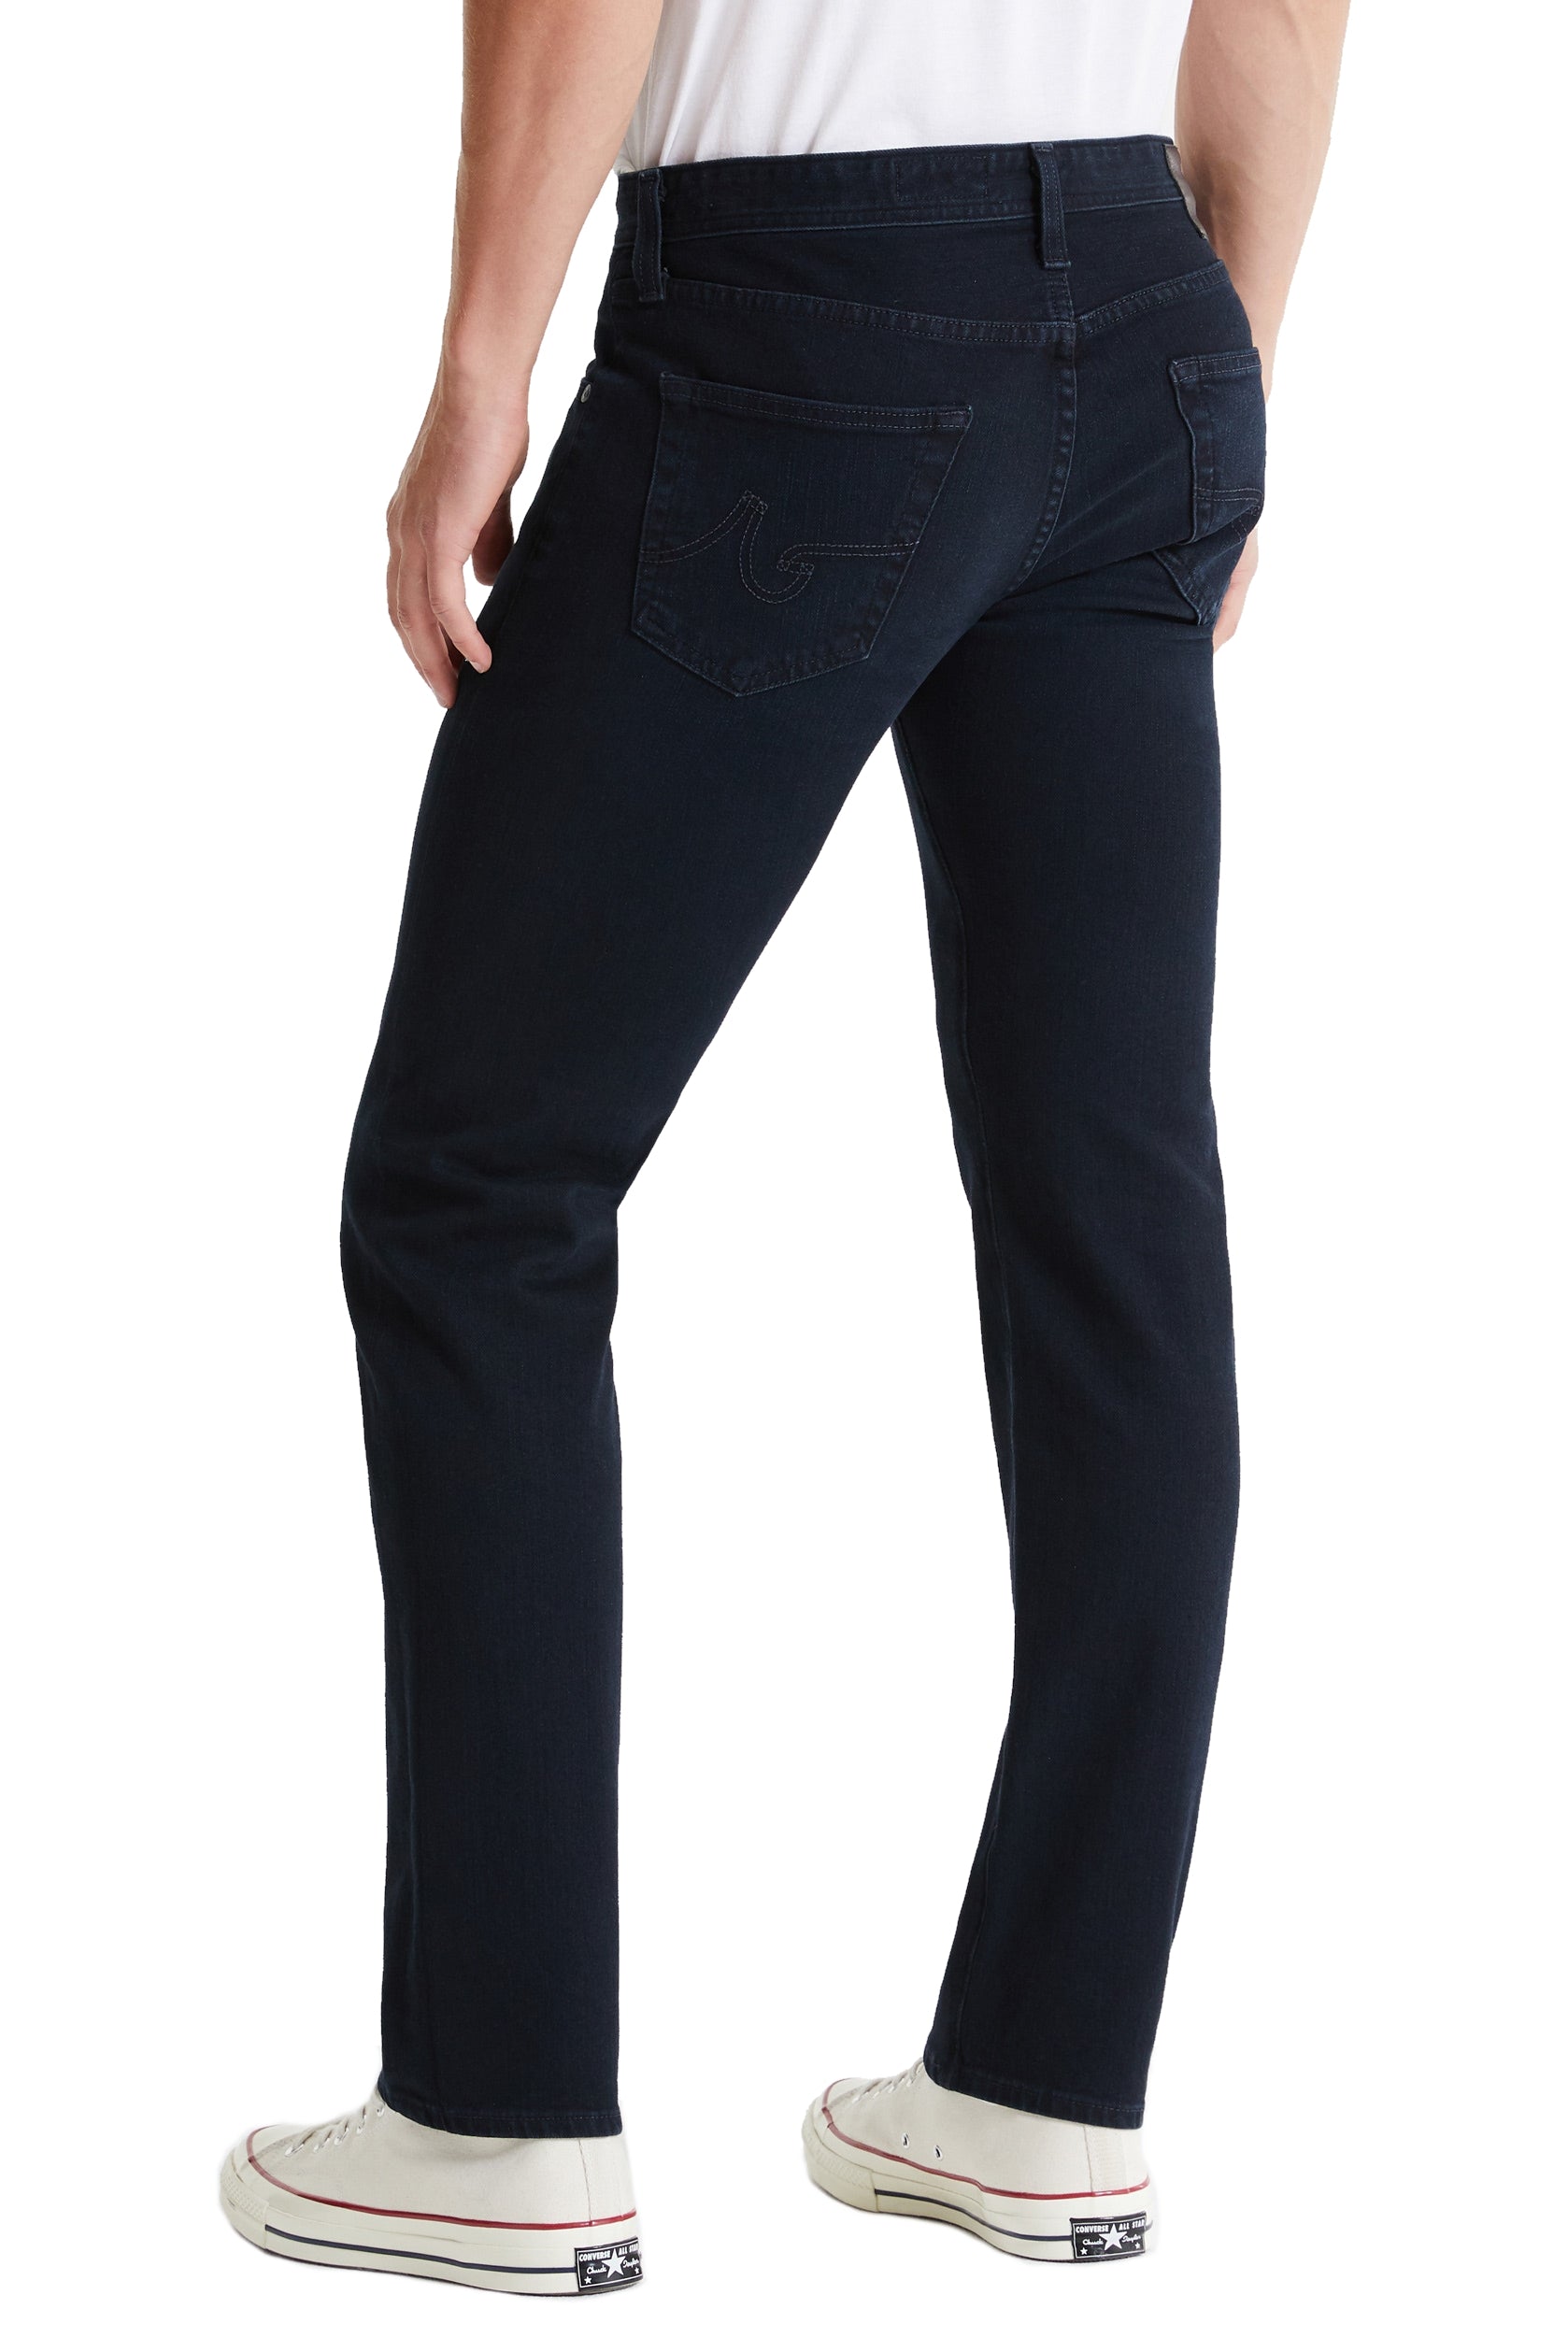 Rodd & Gunn Motion 2 Straight Leg Cotton Jeans – Seattle